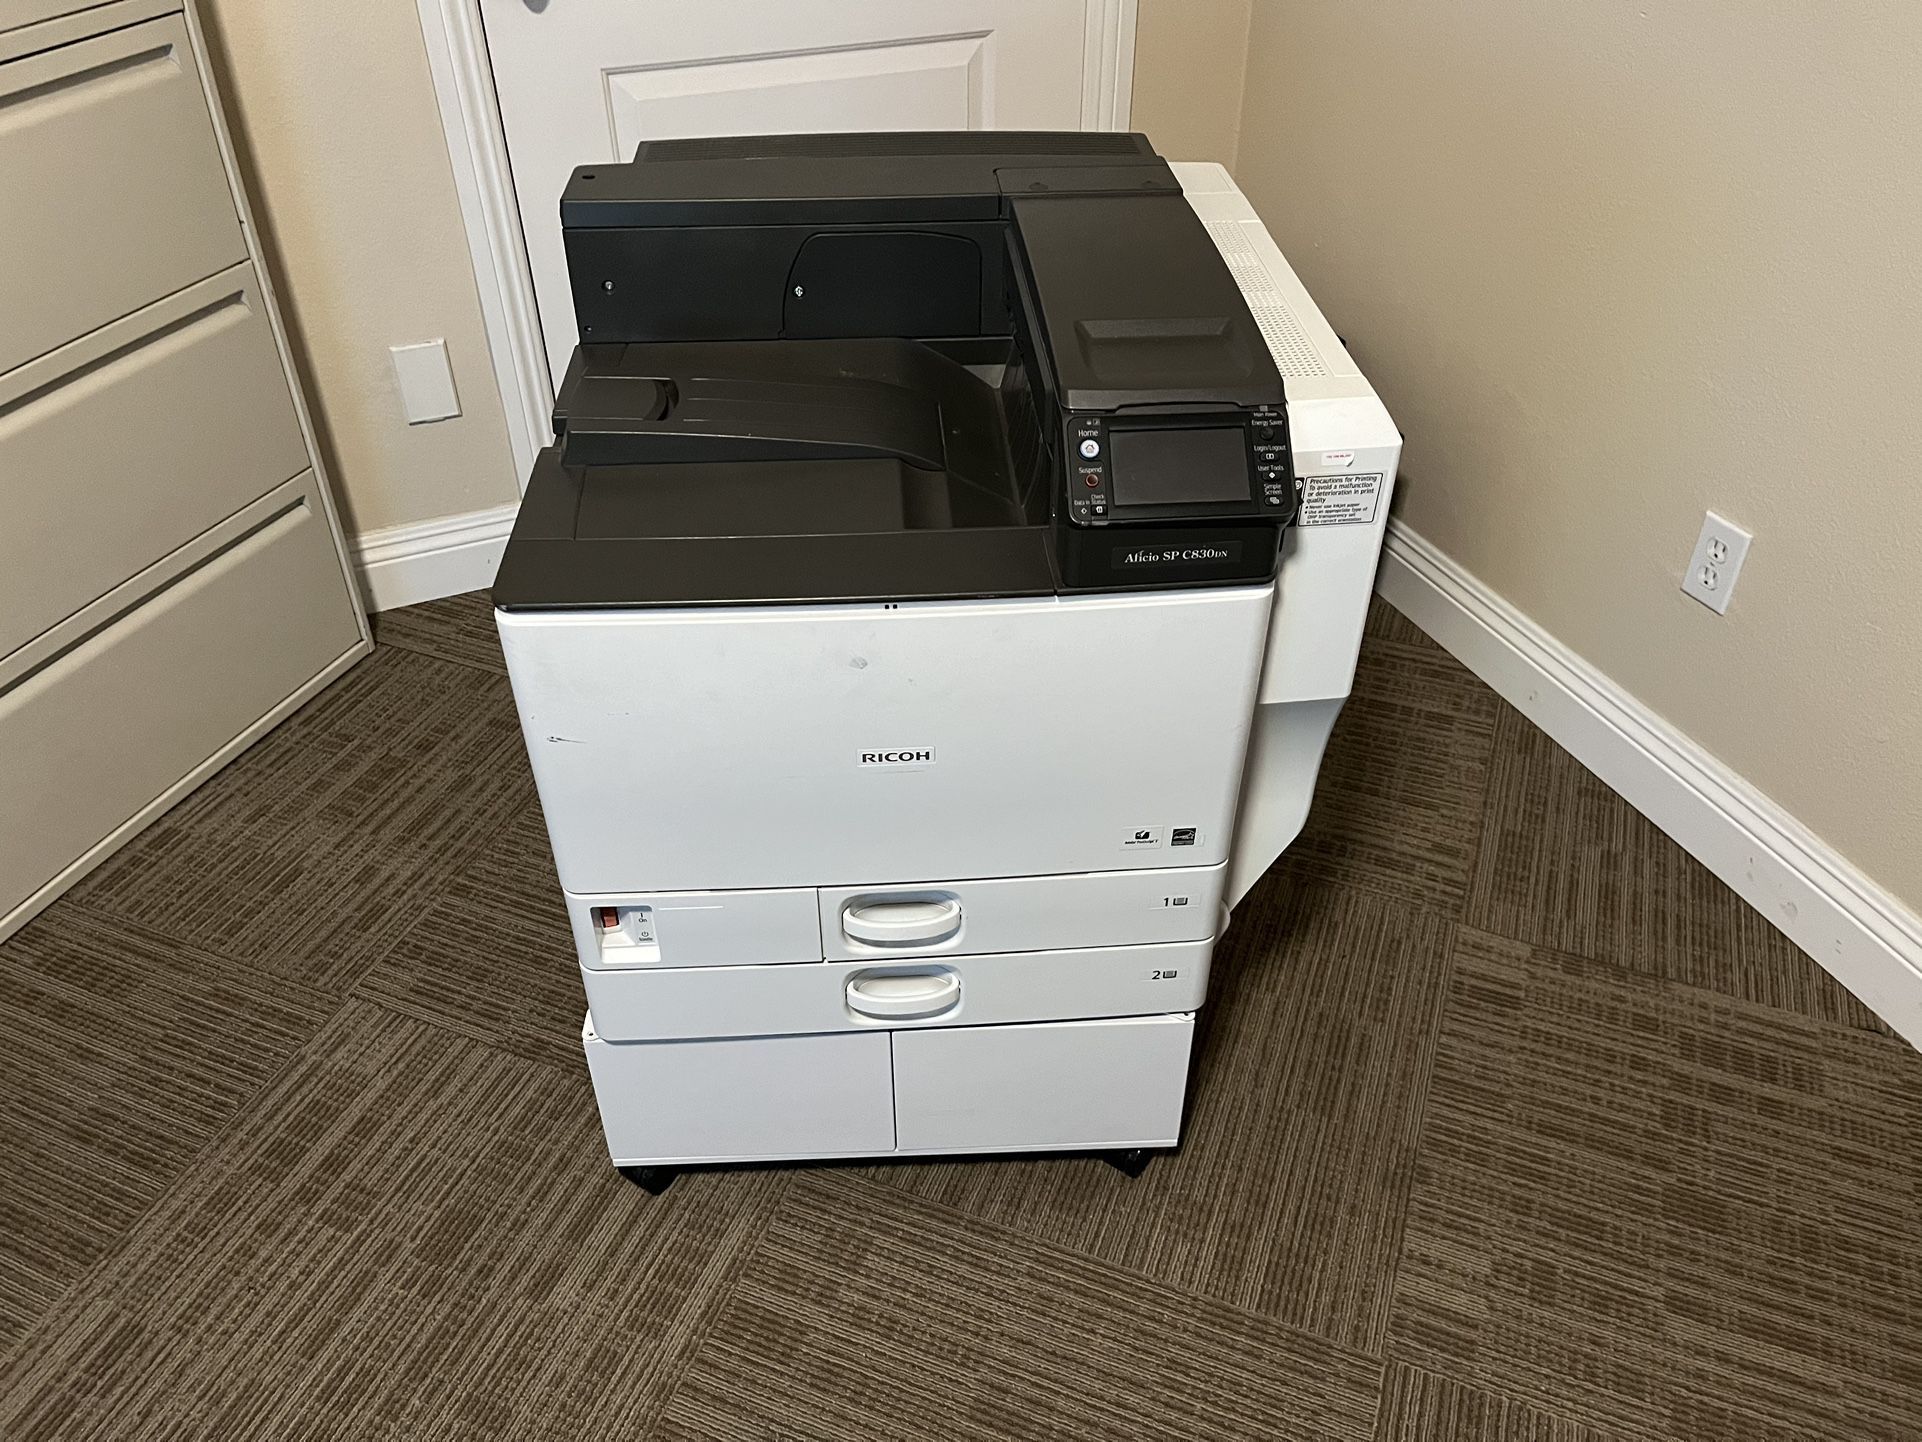 Printer. Ricoh Laser Printer Model # SP830DN